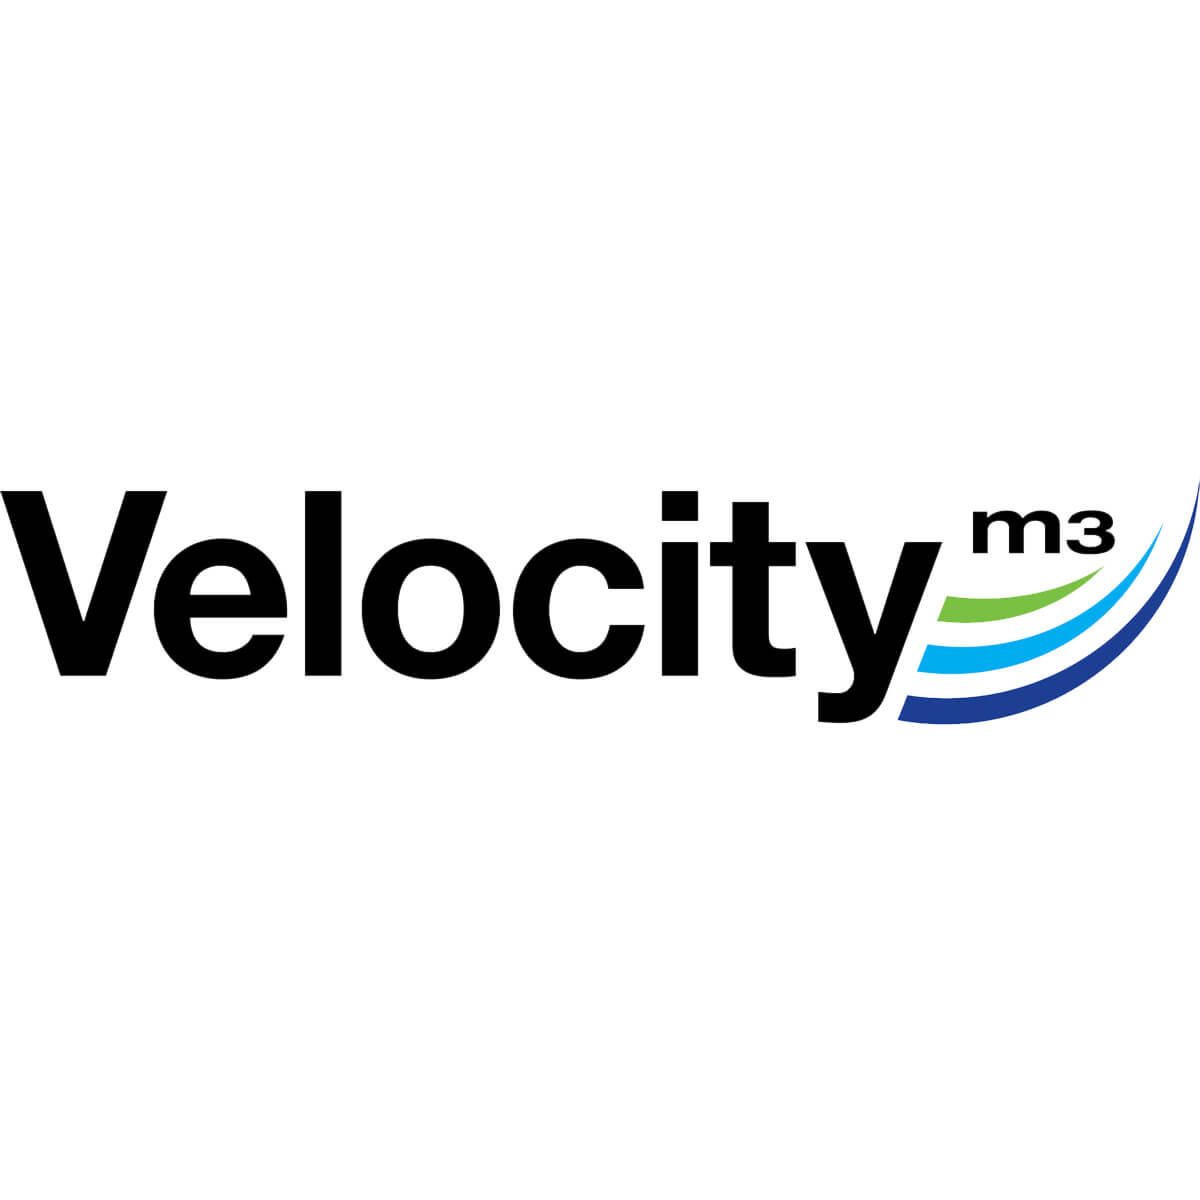 Velocity m3 8.1L